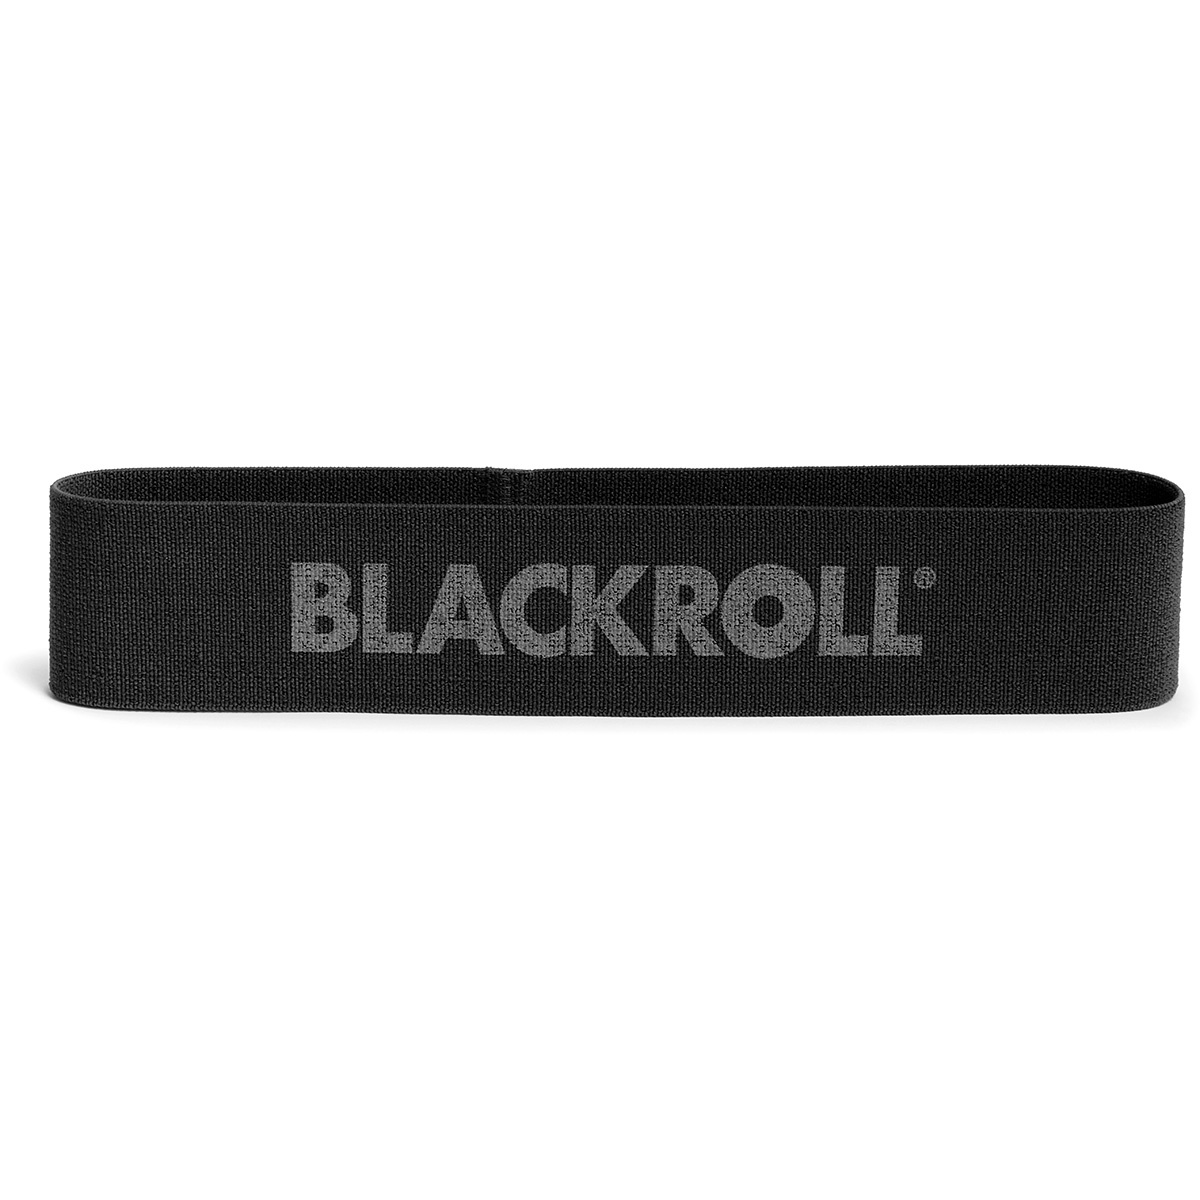 Image of Blackroll Blackroll Loop Band